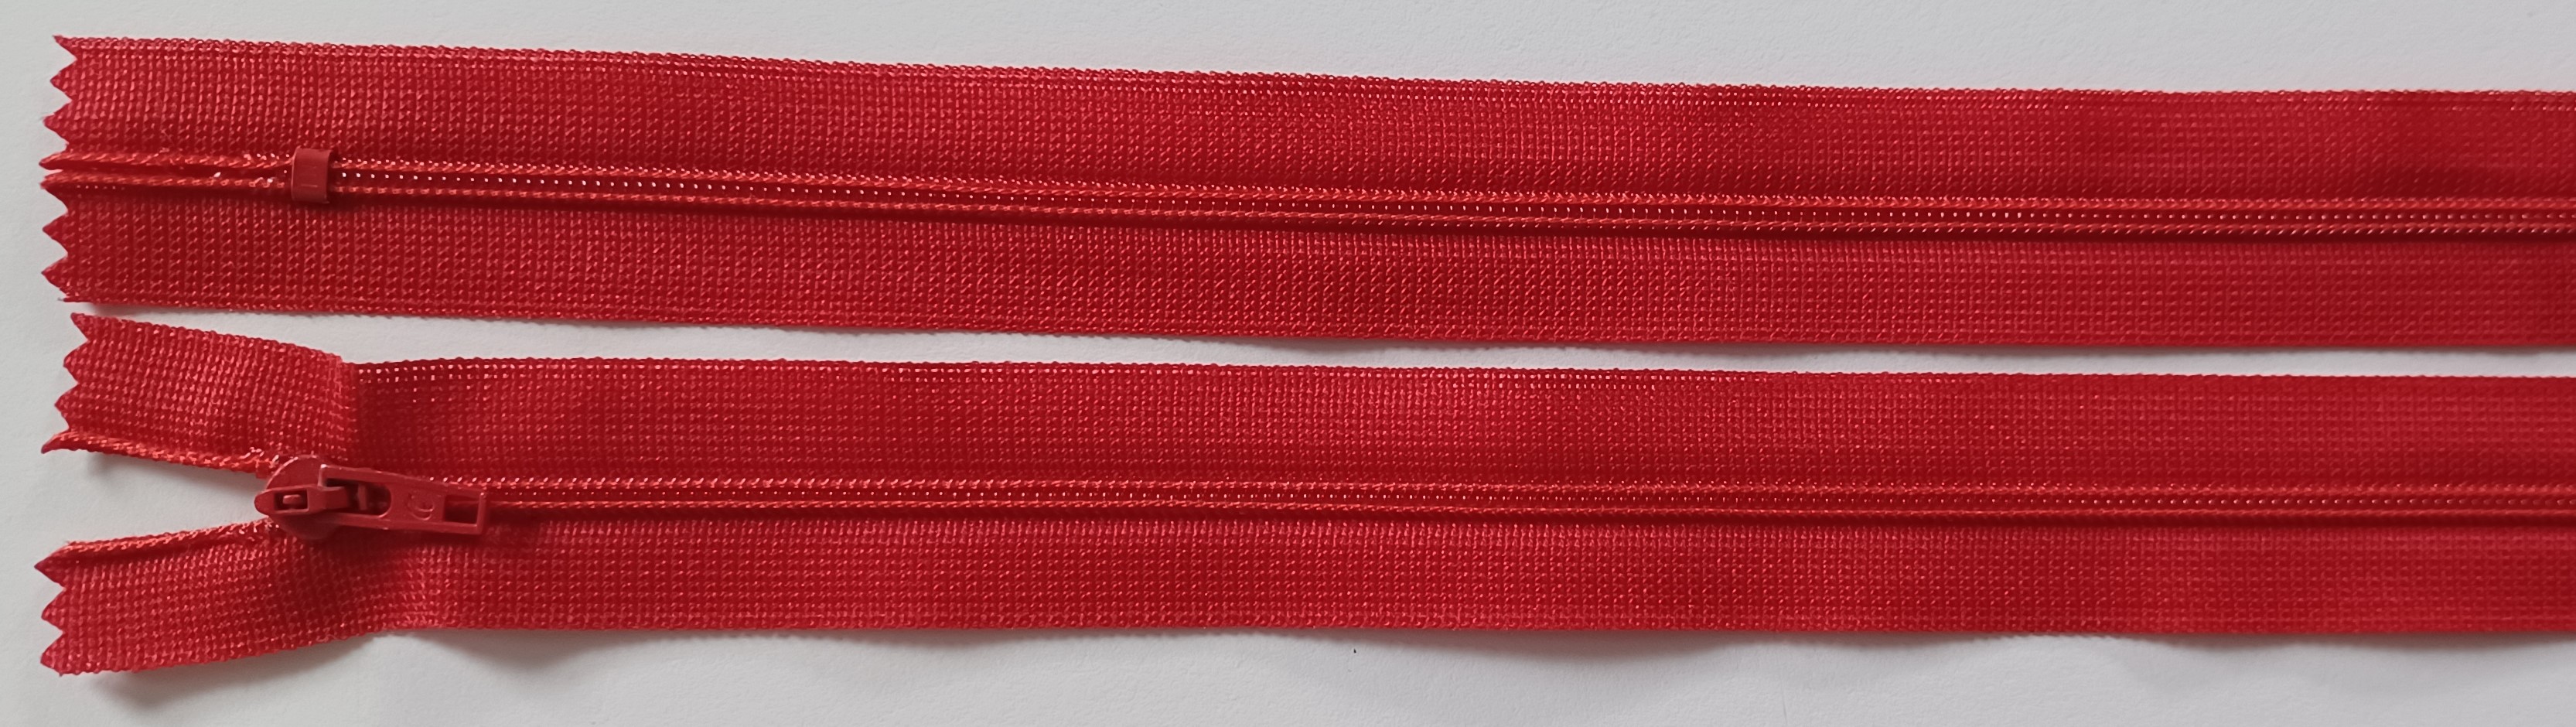 Coats & Clark 8.5" Red Nylon Coil Zipper